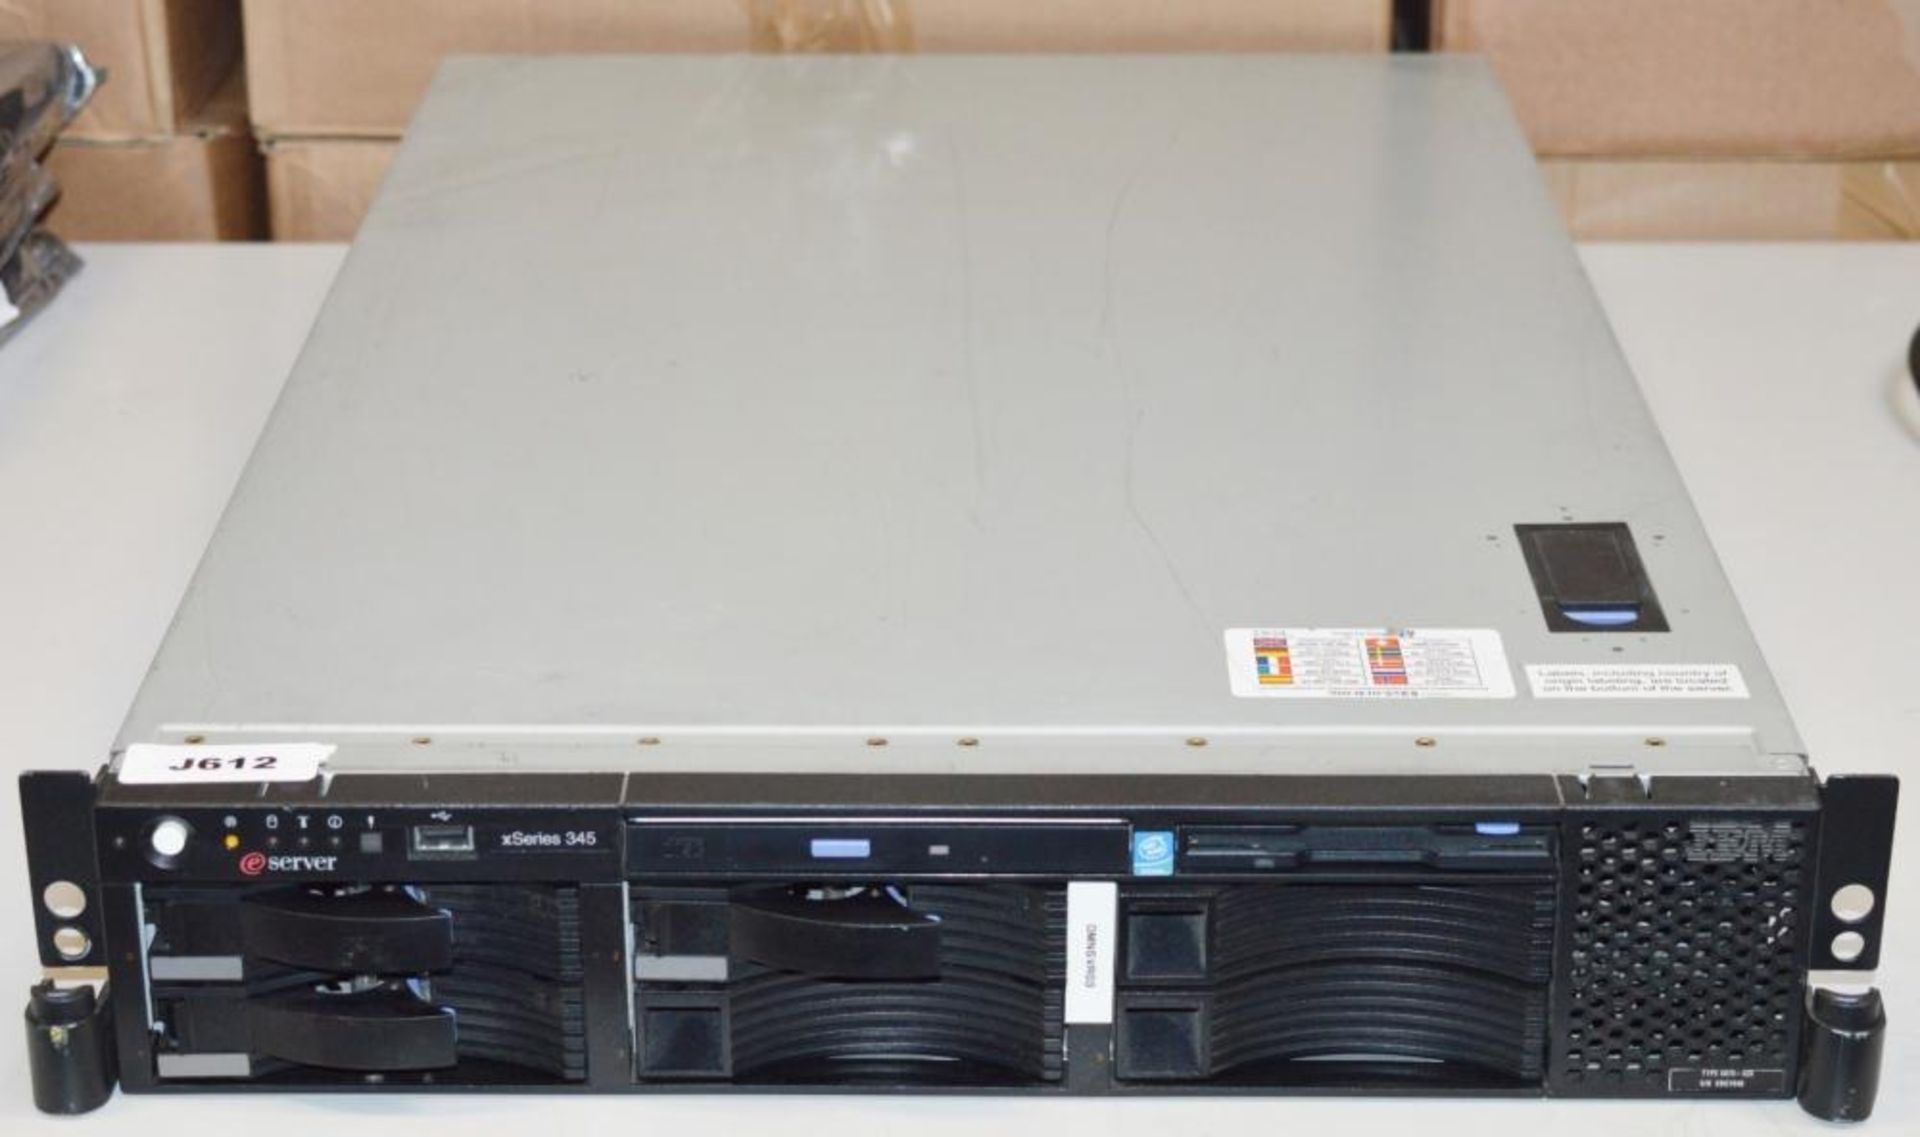 1 x IBM xSeries 345 Server - Includes Dual Xeon Processors, 1gb Ram, Raid Card - Hard Disk Drives